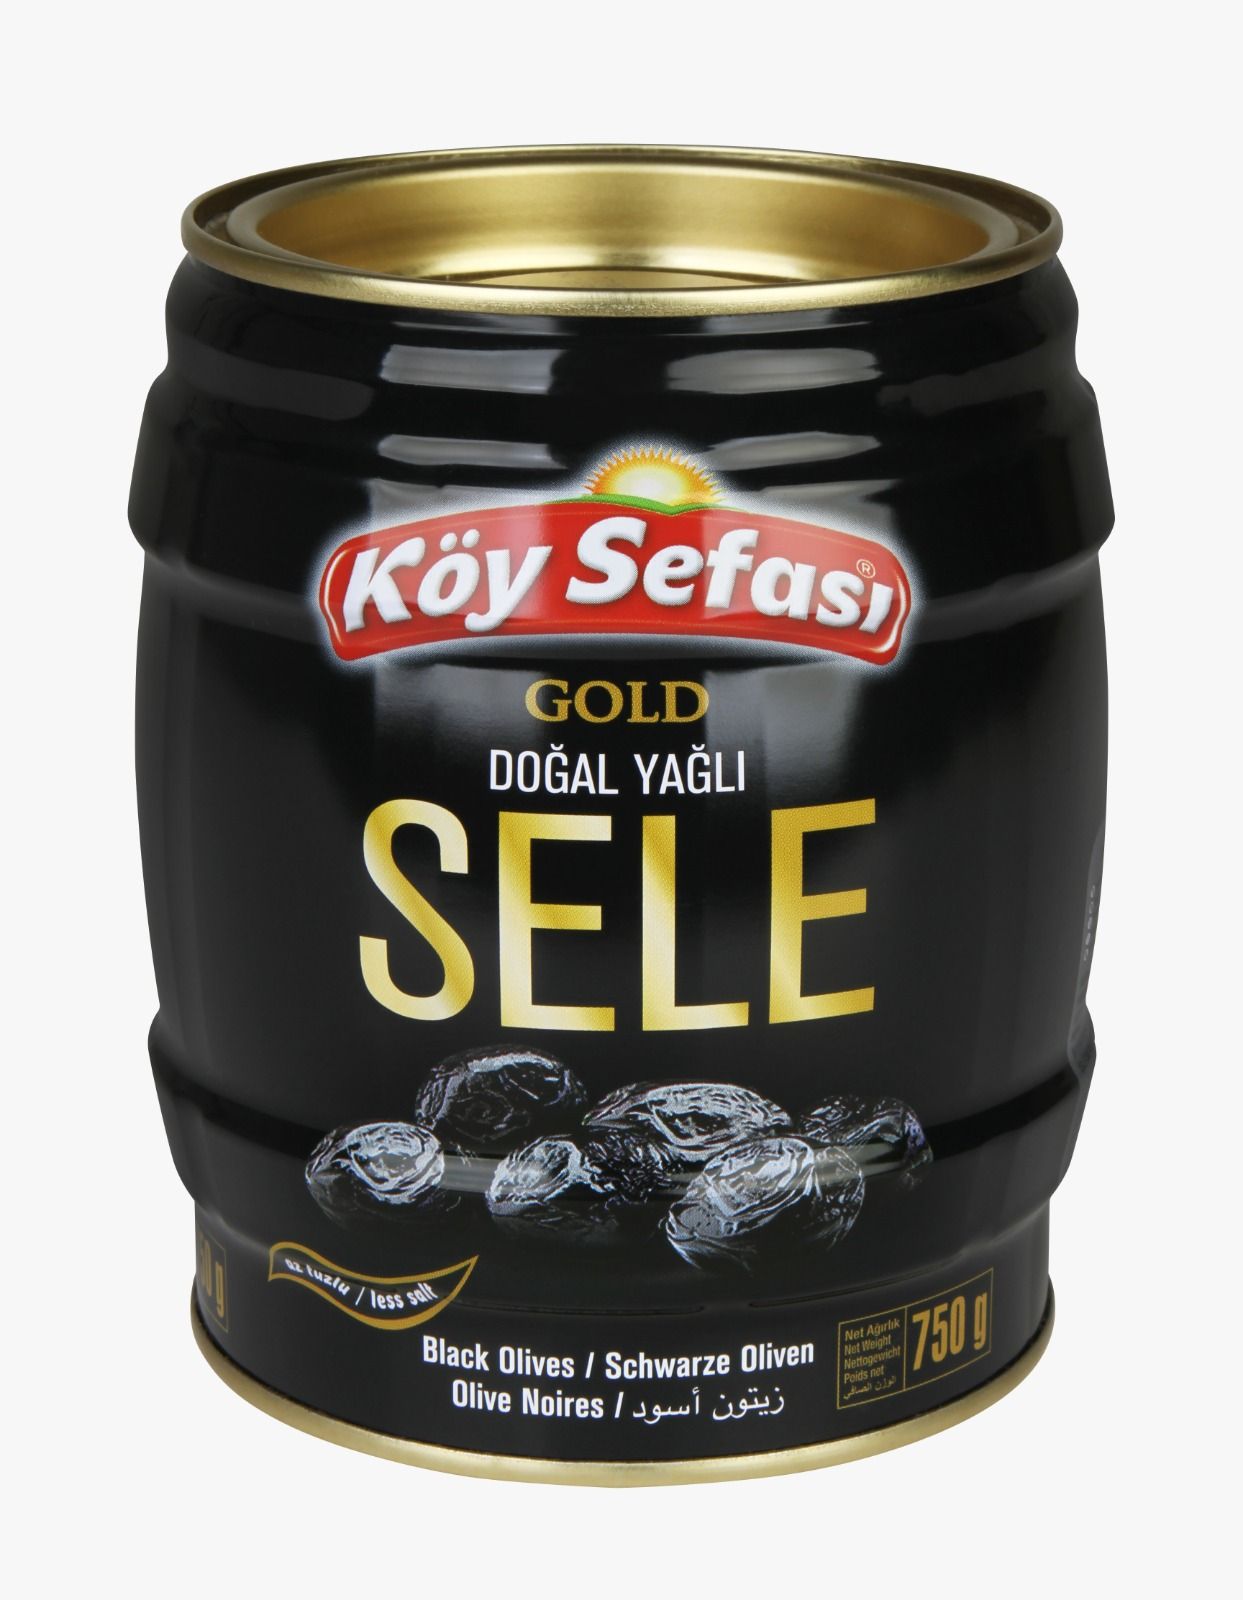 Koy Sefasi Dogal Yagli Sele Fici (750G) - Aytac Foods